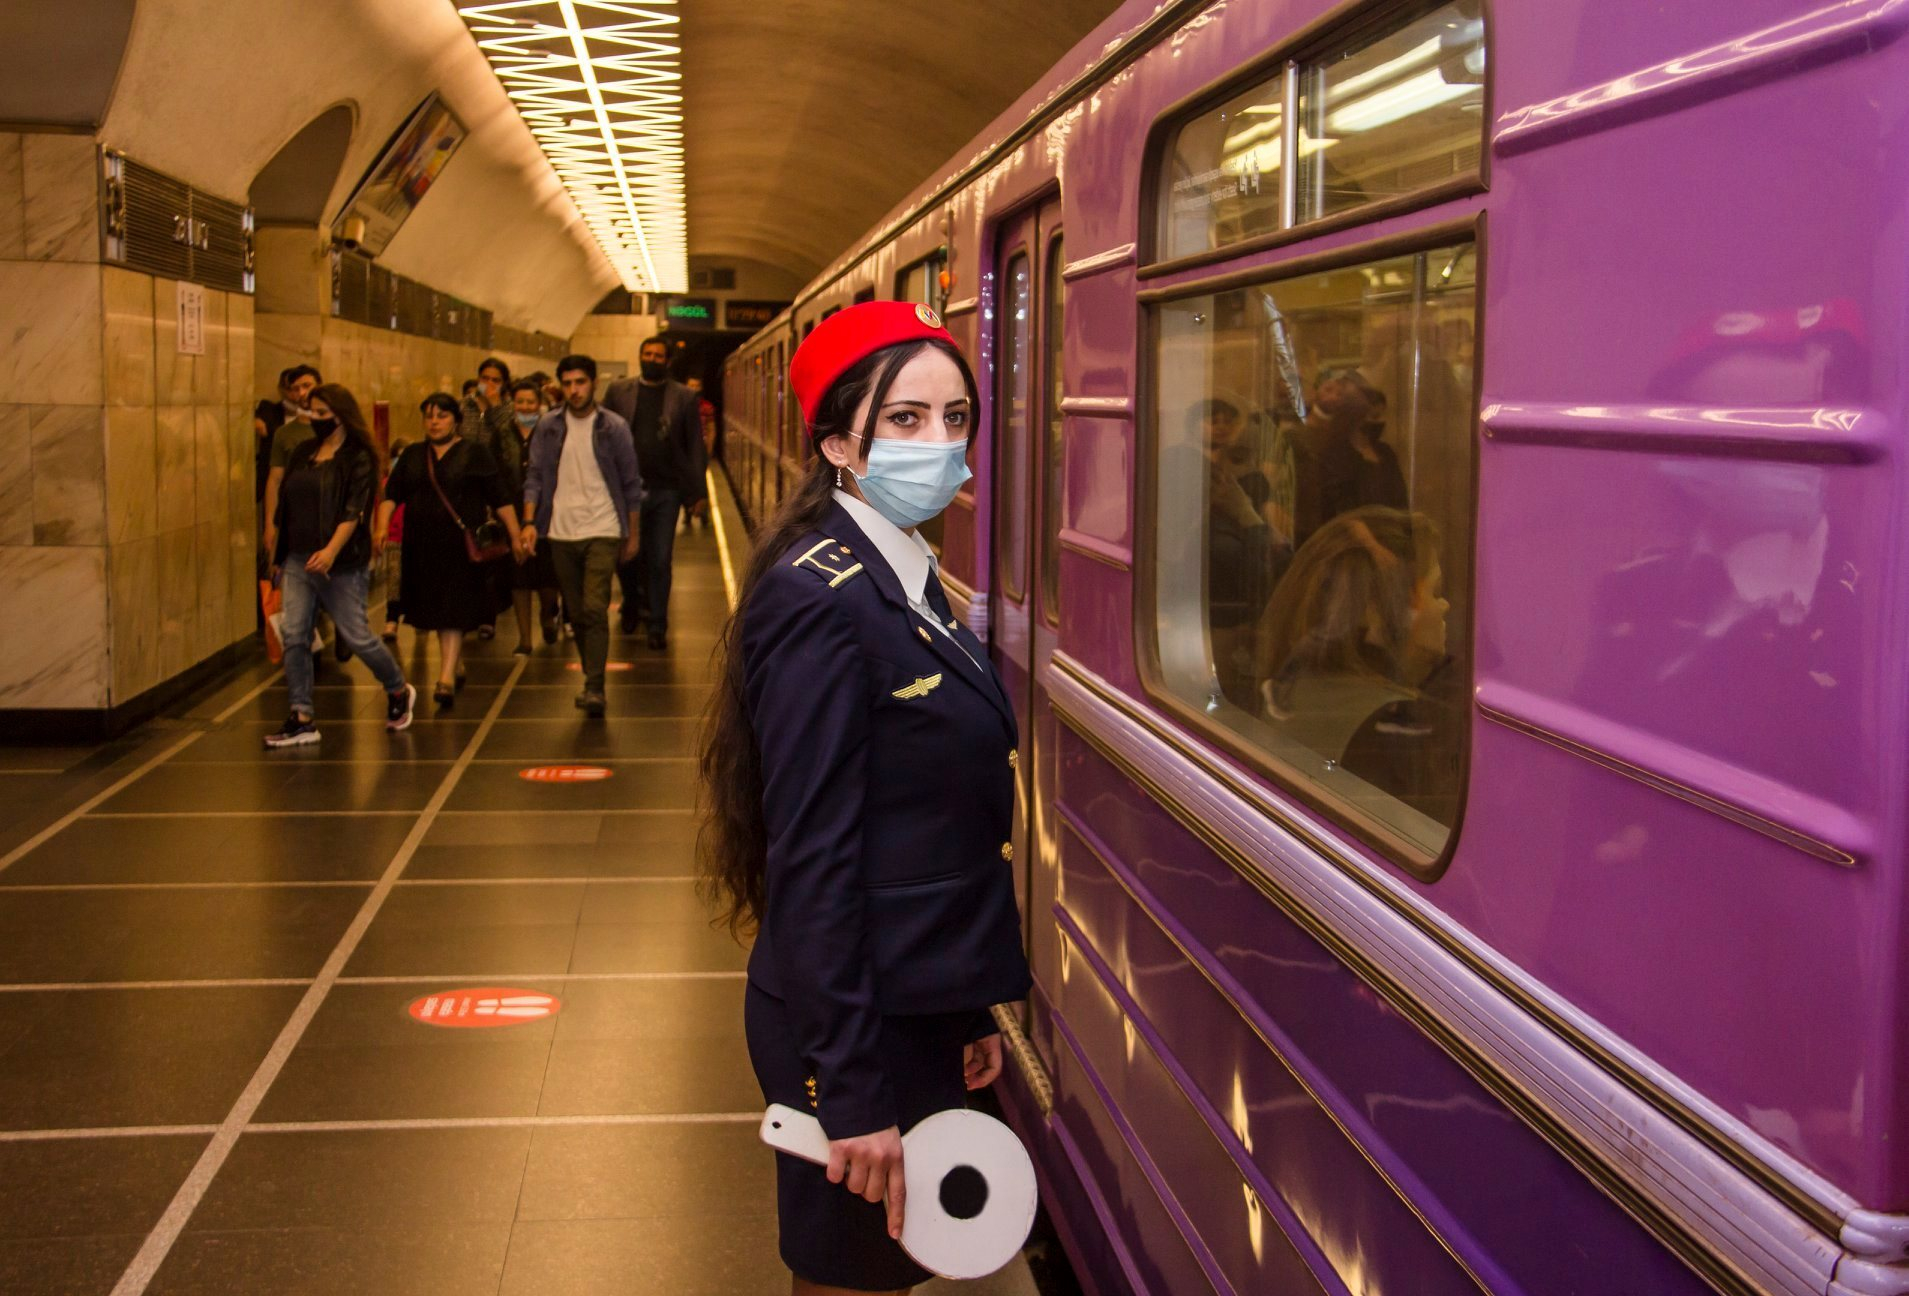 29 сотрудников бакинского метро заразились коронавирусом, один скончался